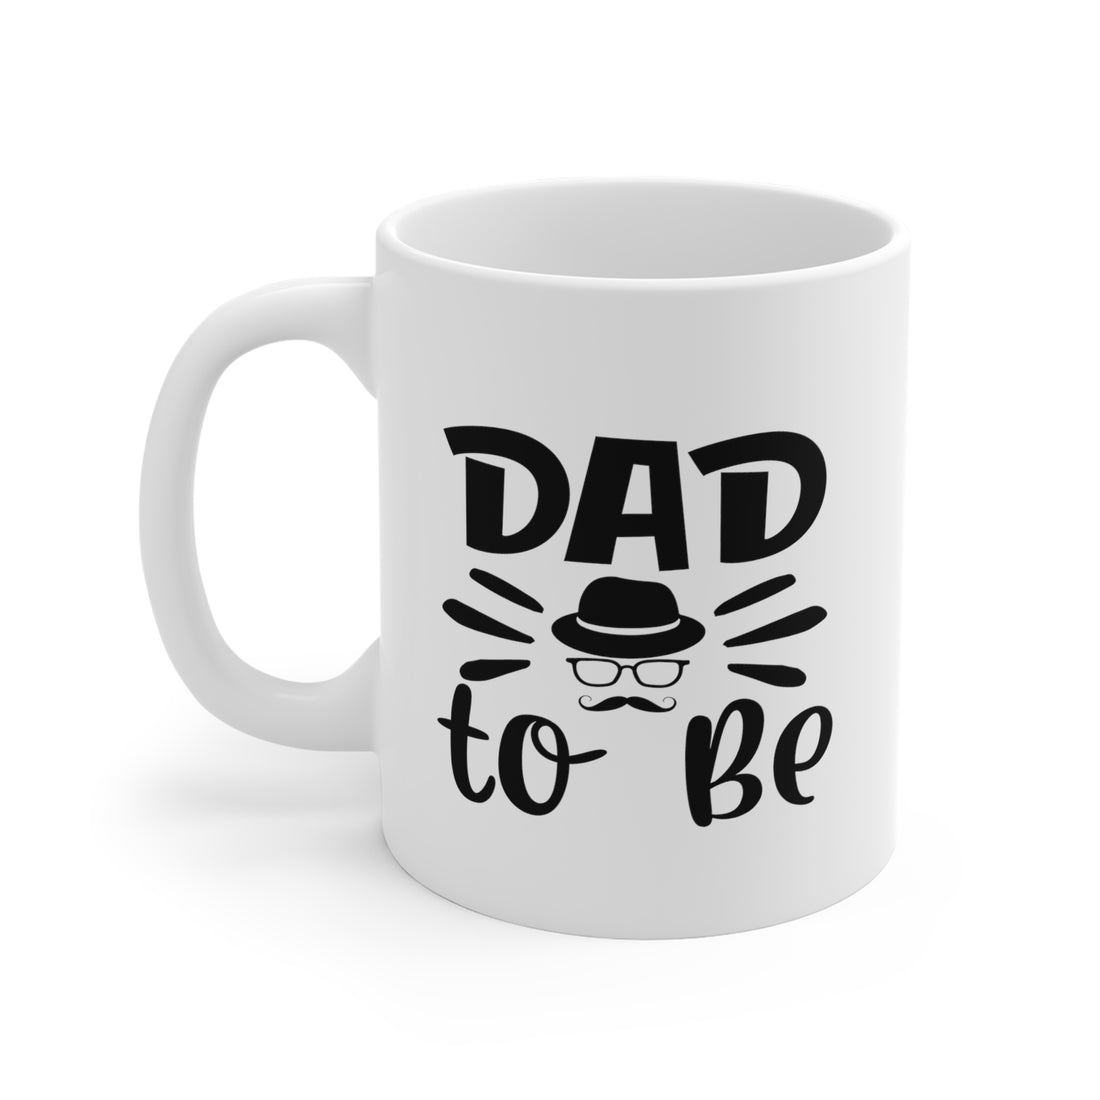 Dad To Be - White Ceramic Mug 2 sizes Available